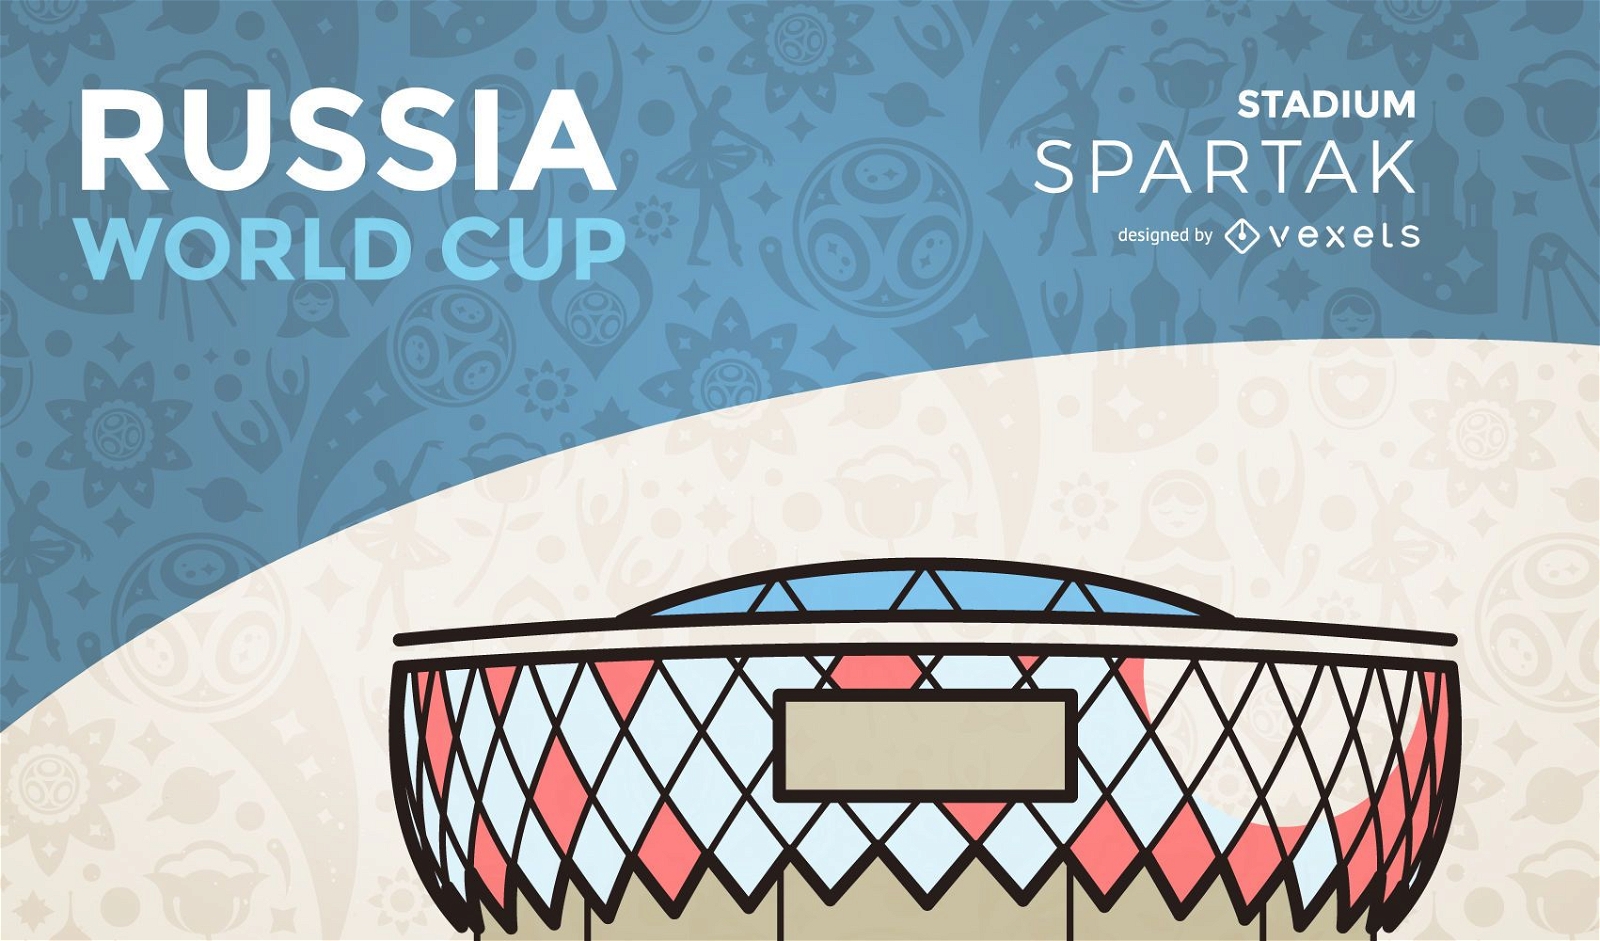 Spartak world cup stadium